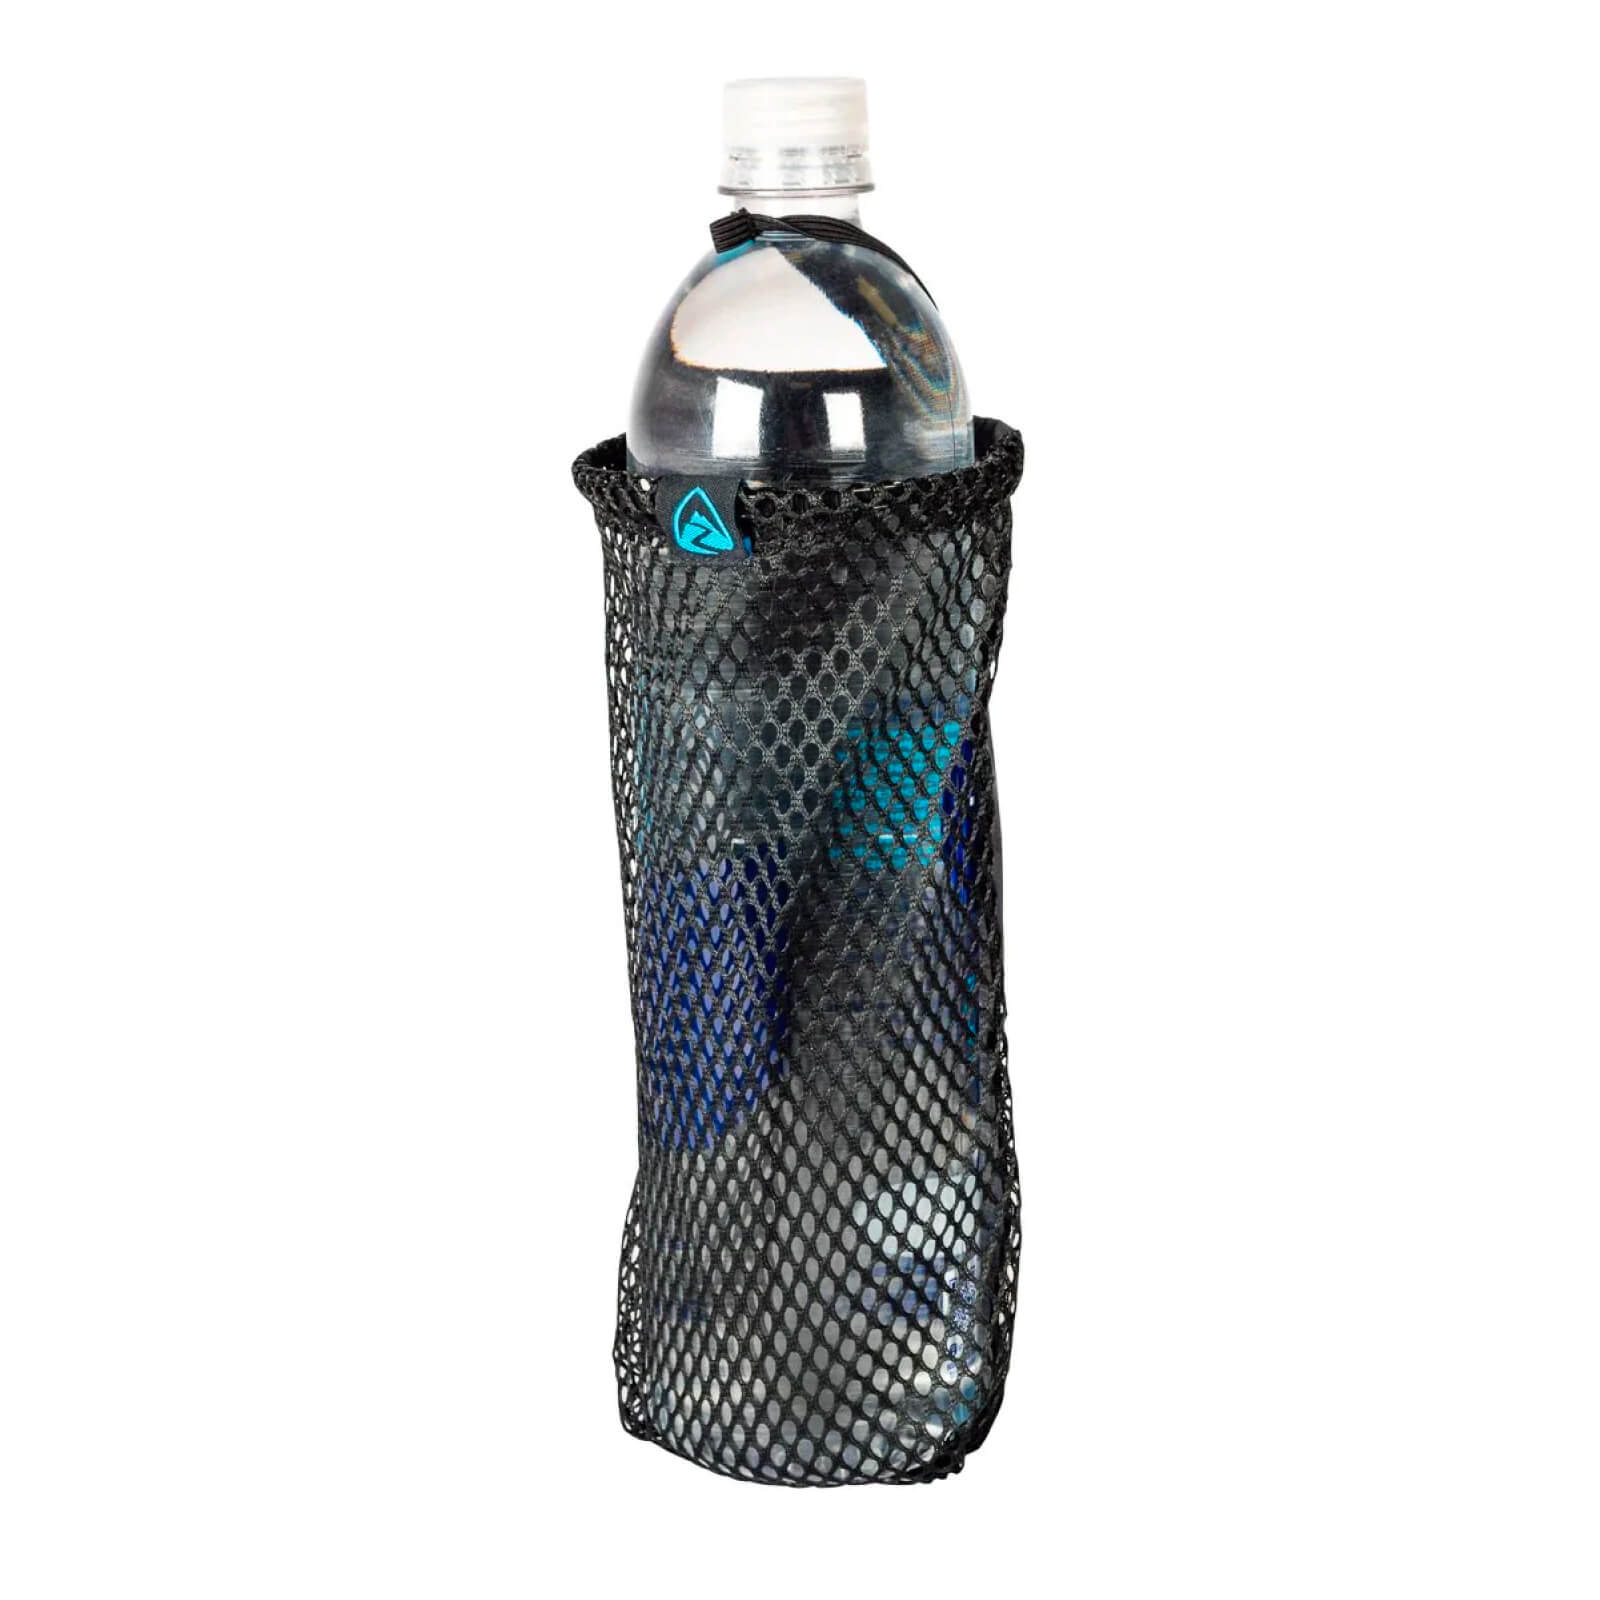 https://www.adventurealan.com/wp-content/uploads/2023/01/Zpacks-Water-Bottle-Sleeve-1-1.jpg